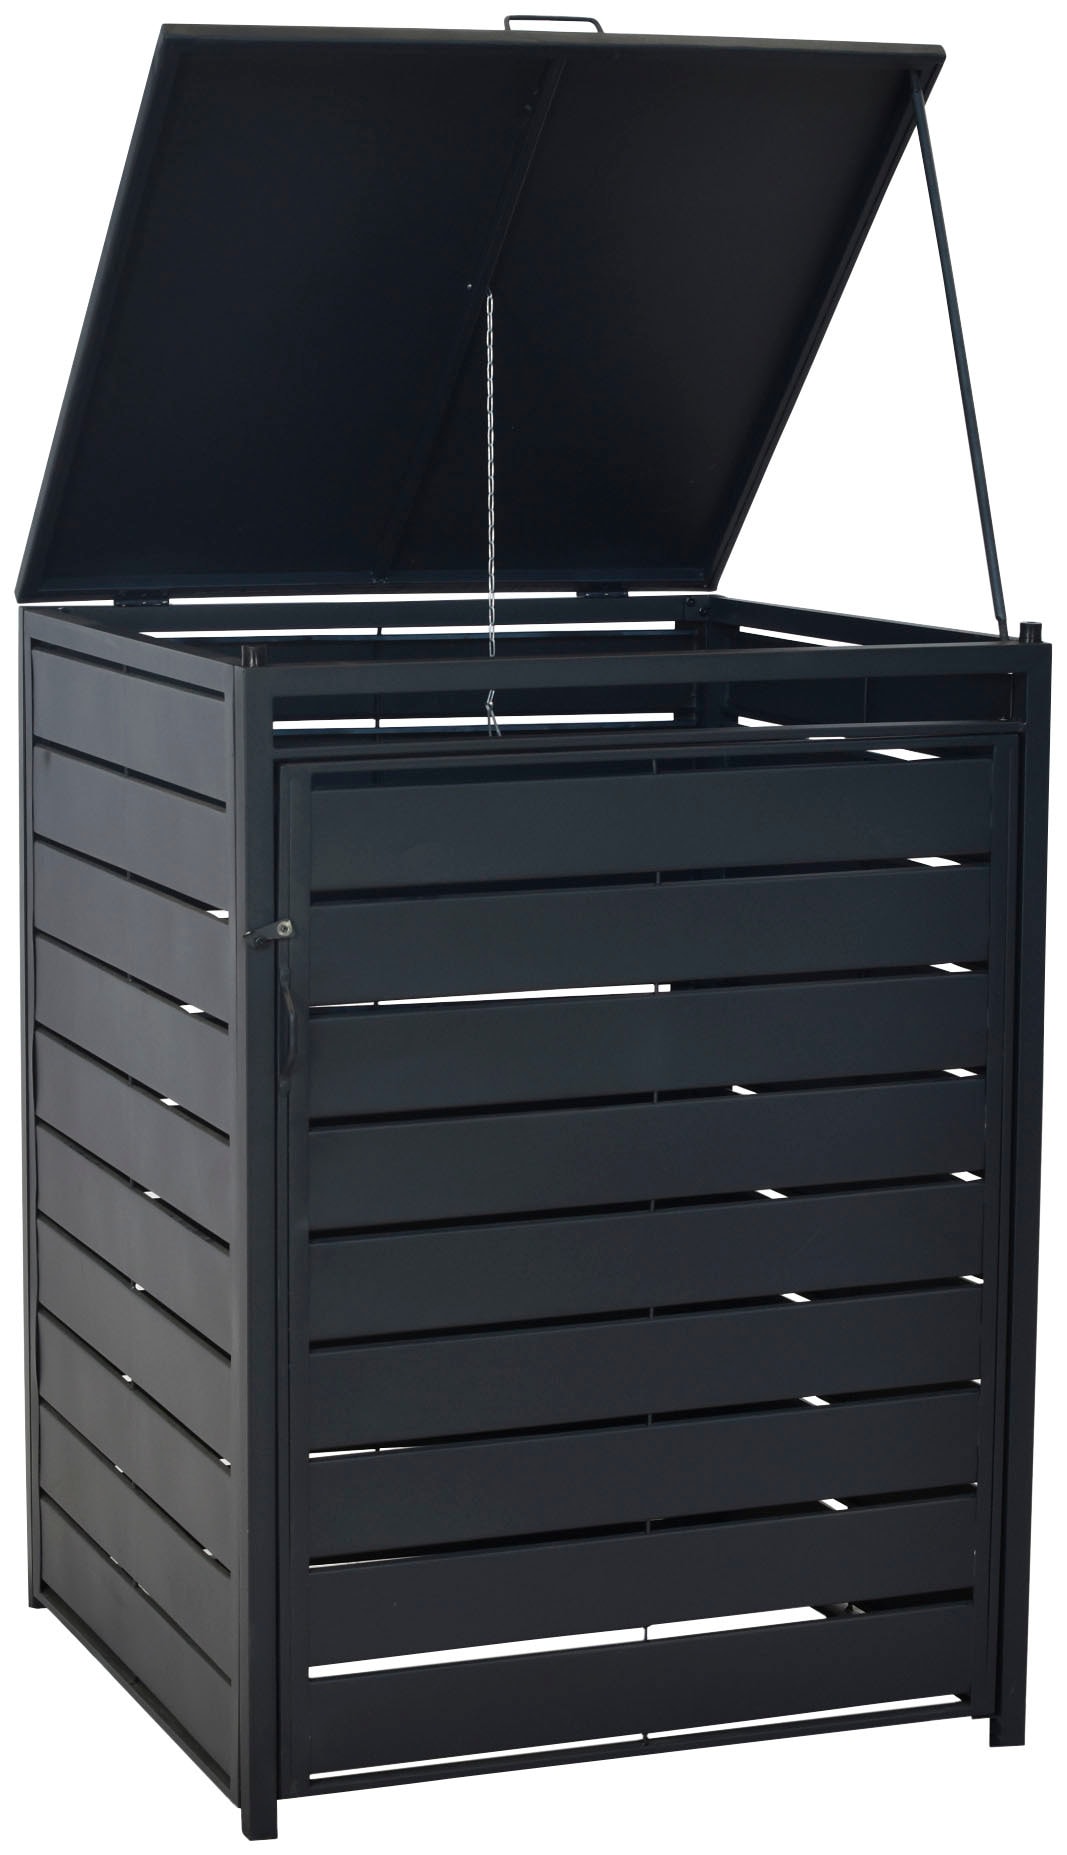 MERXX Mülltonnenbox »Basis Alu/Stahl«, für 240 Liter Mülltonne